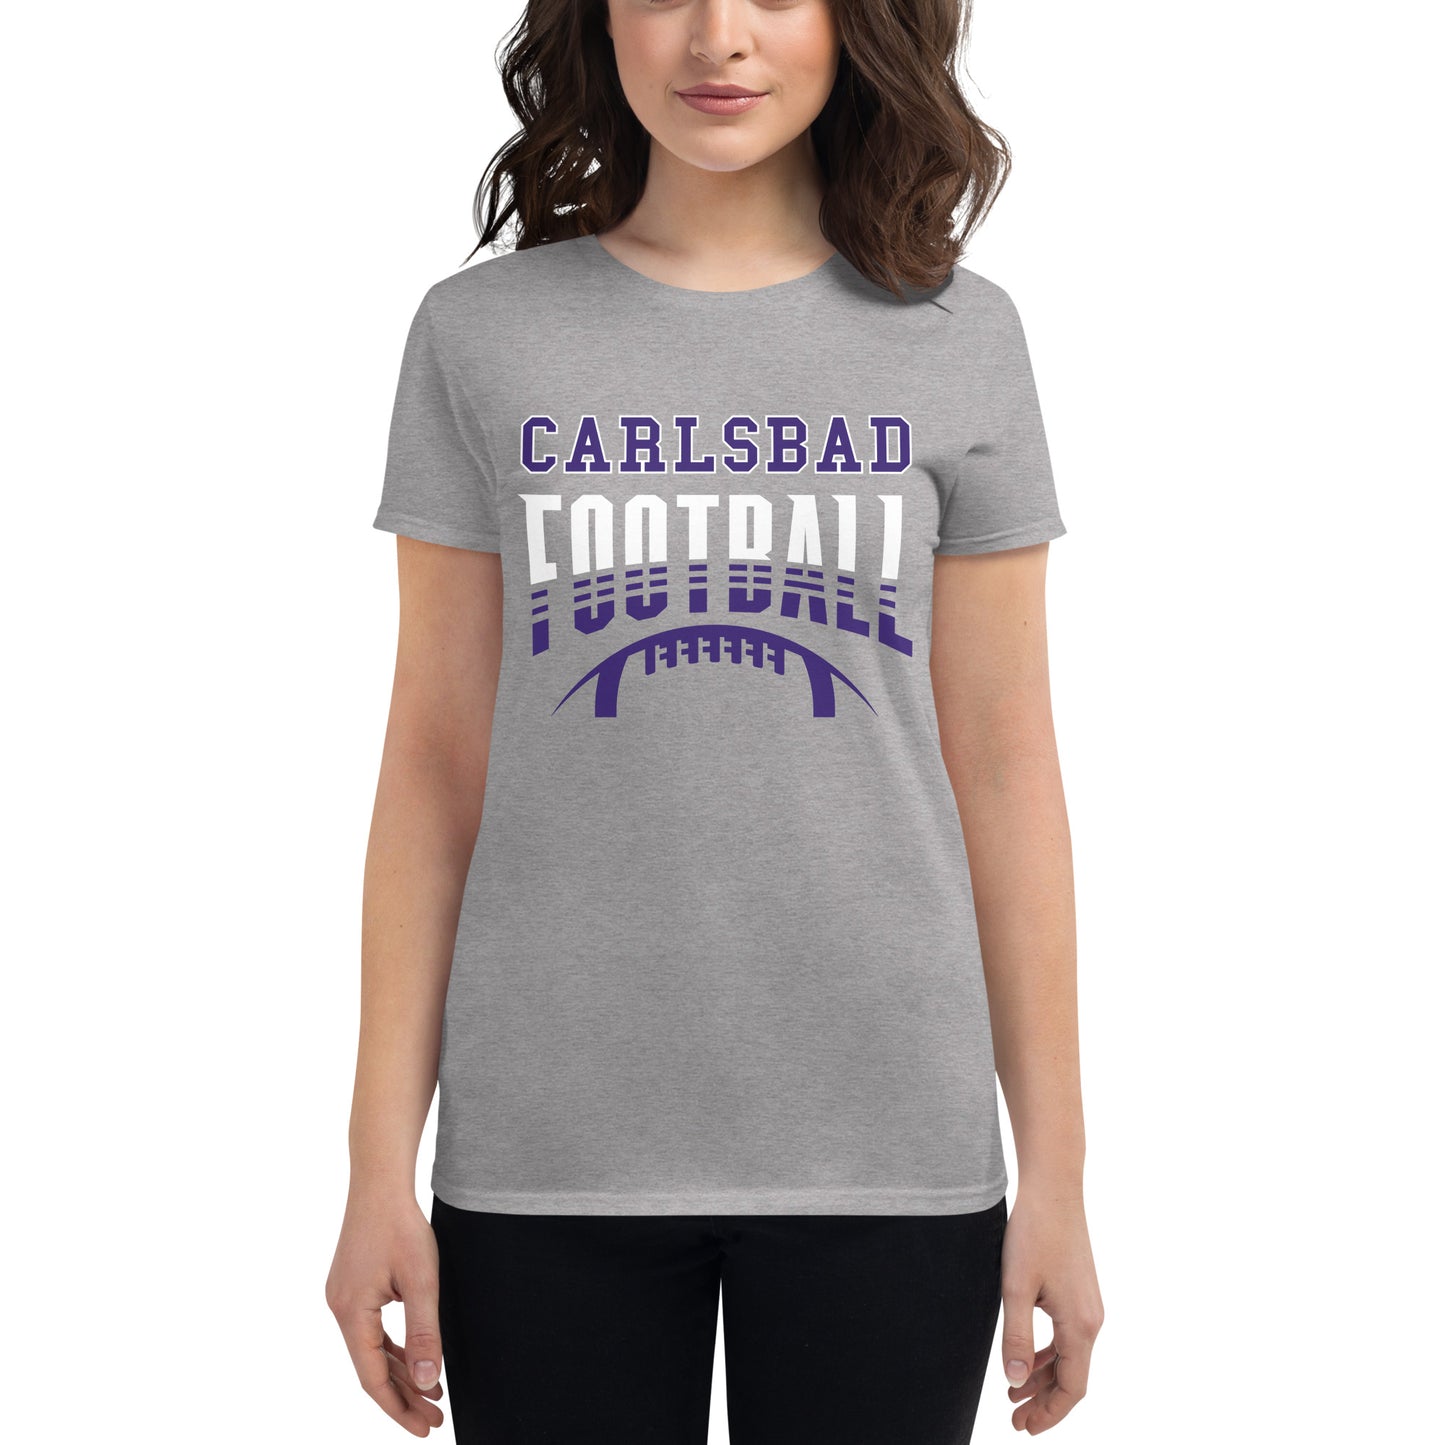 Carlsbad Football Women's short sleeve t-shirt